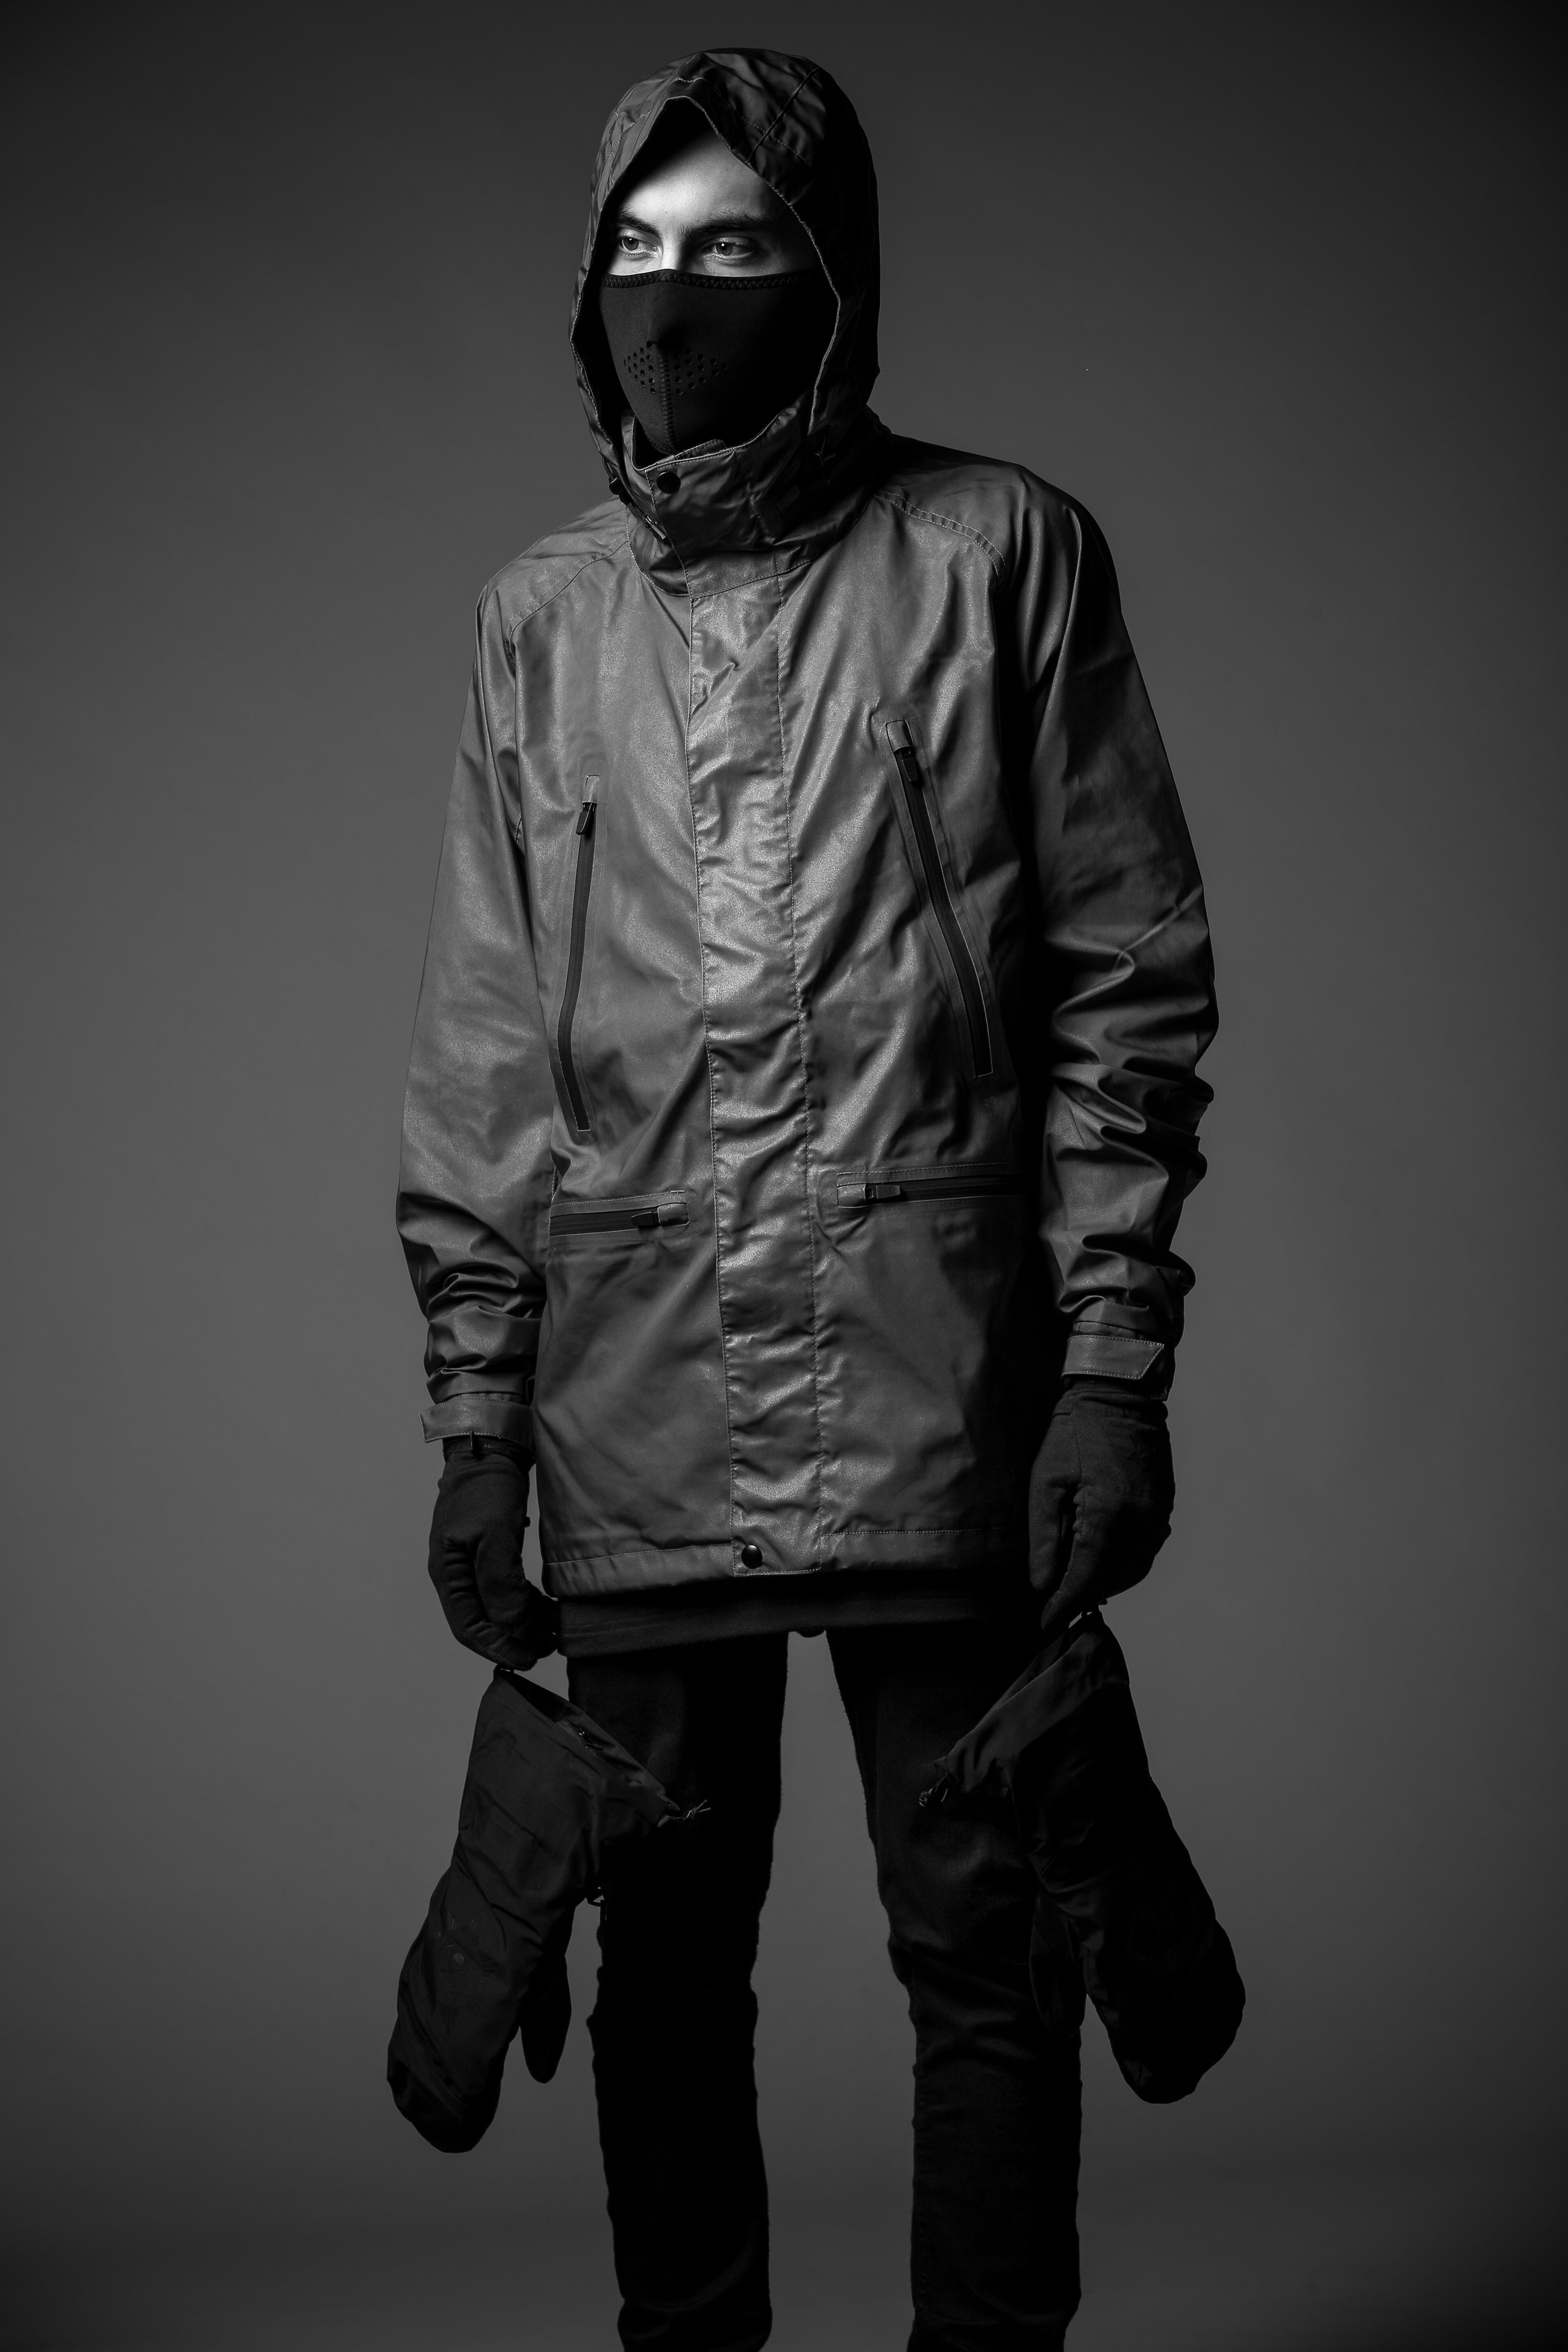 Burton x Black Scale 2016 Winter Collection Pants Jackets snowboarding Lookbooks hard wear accessories